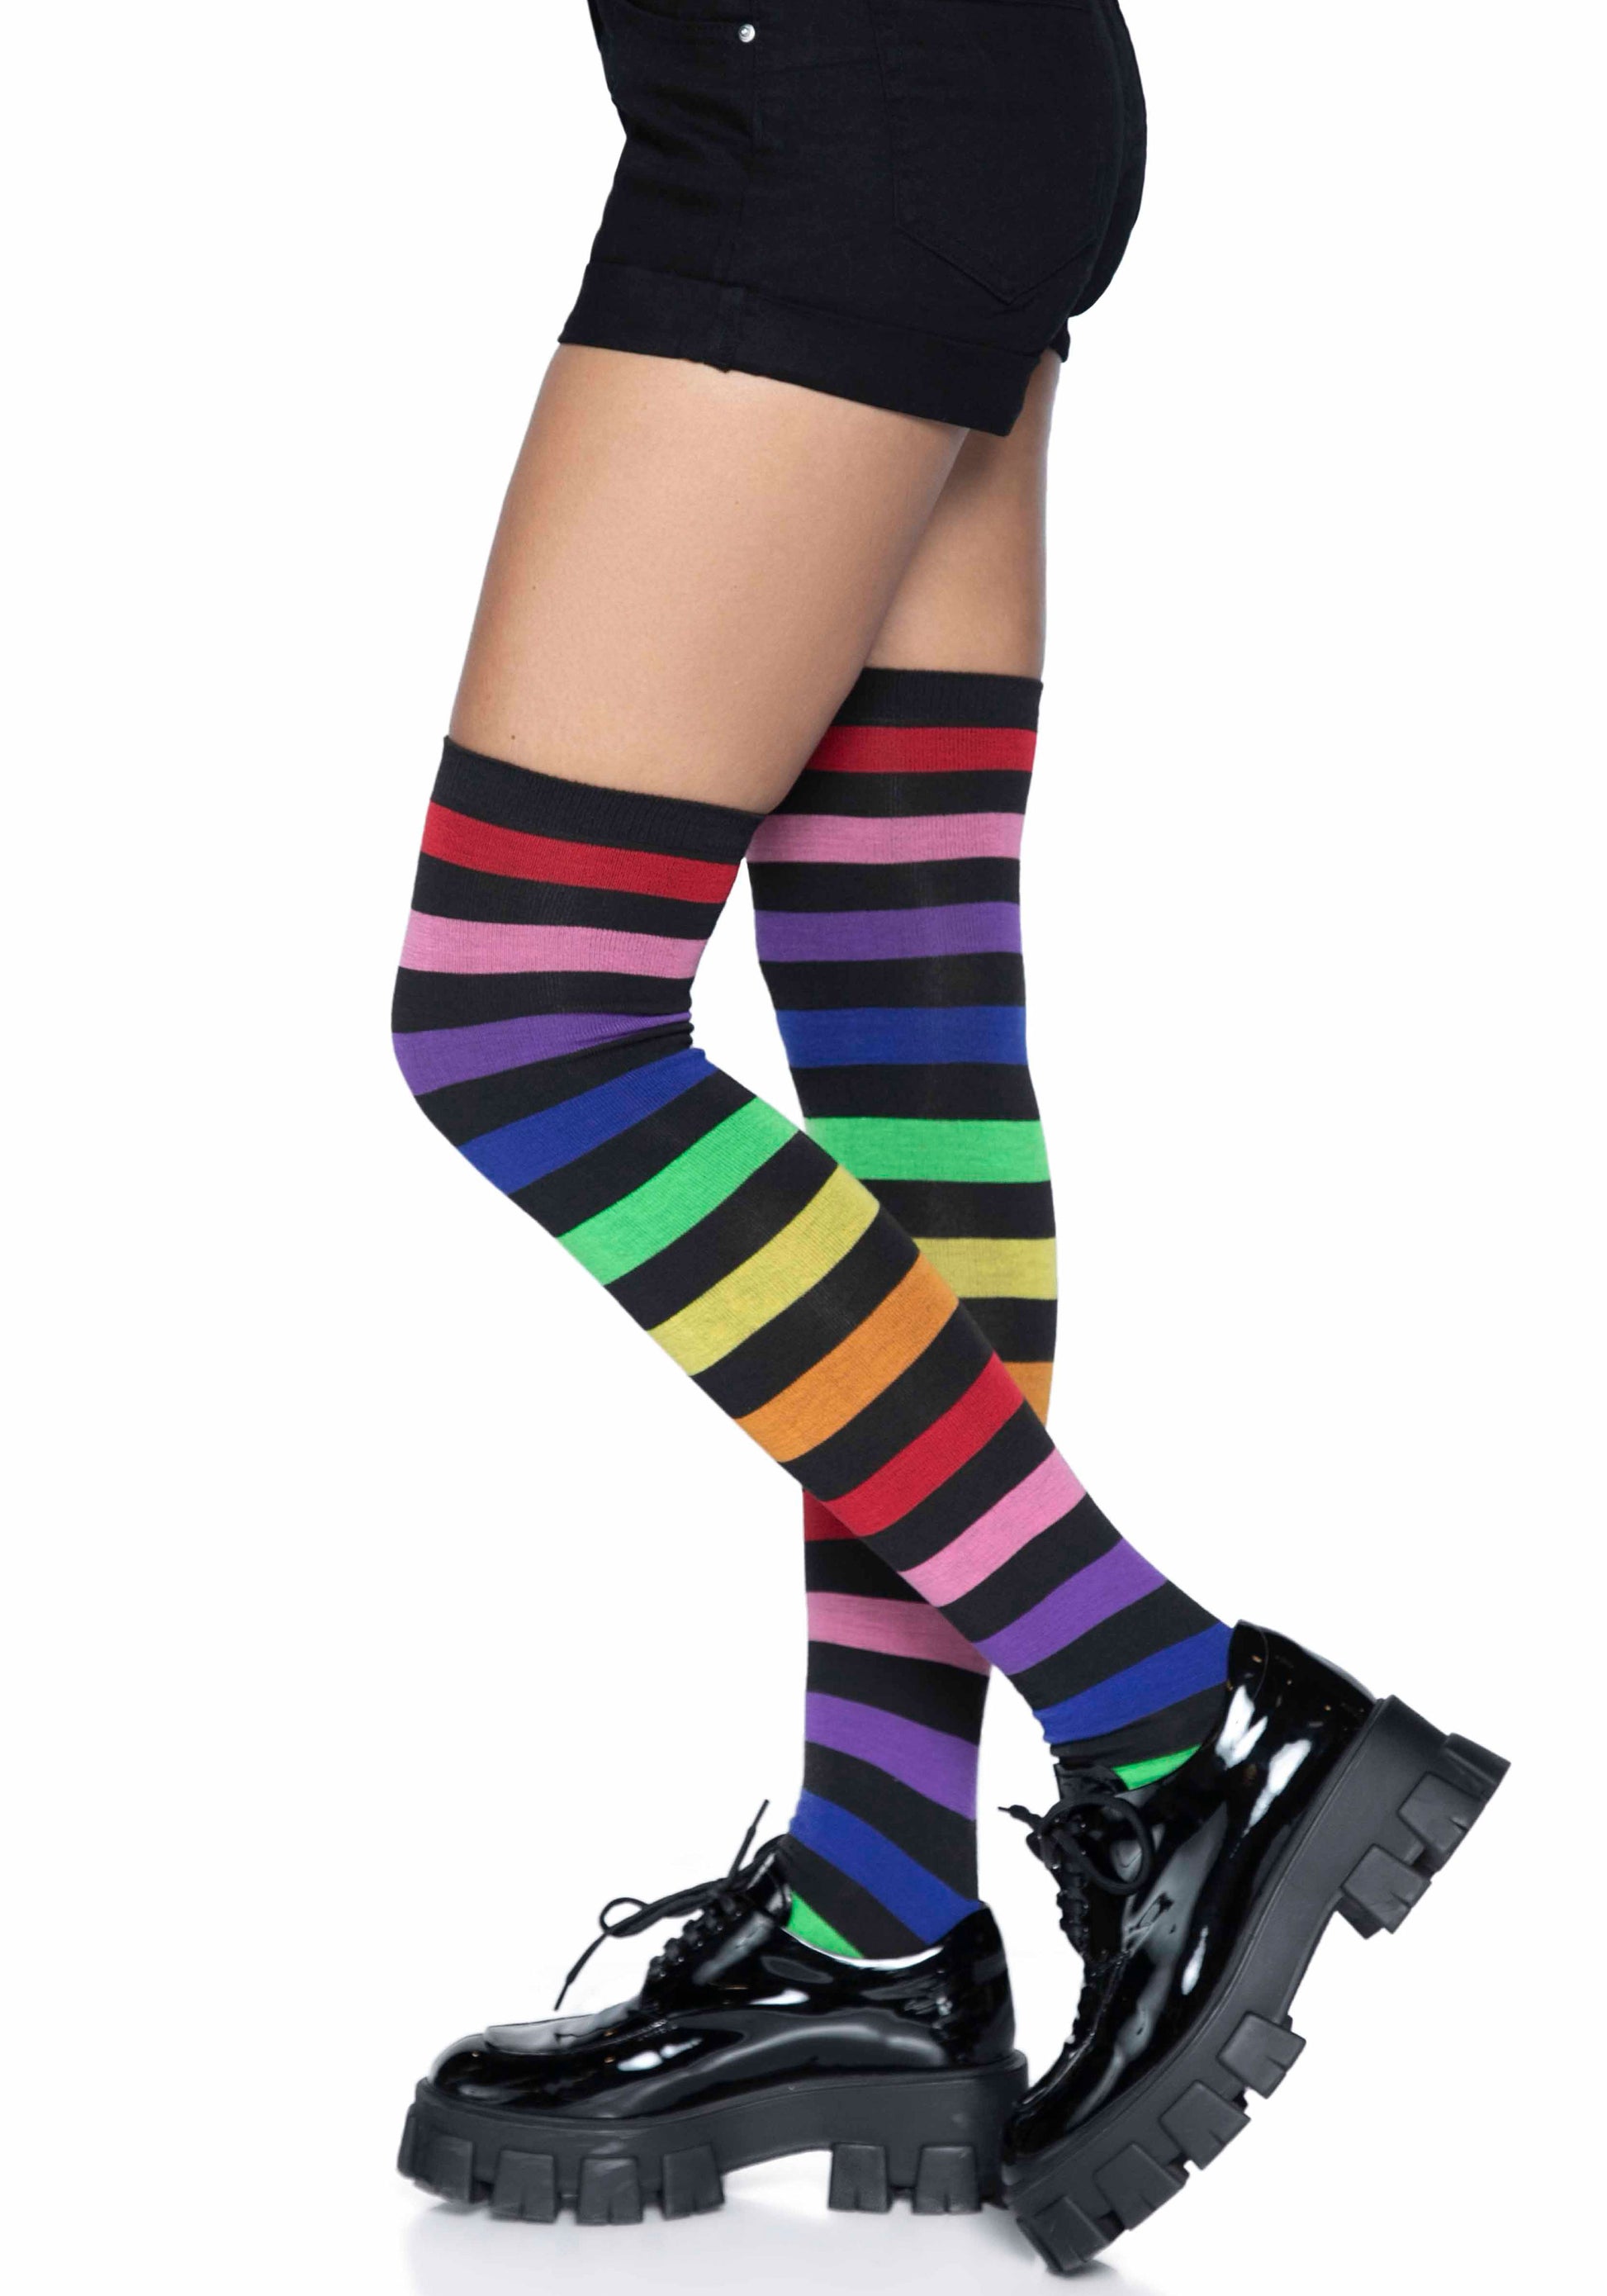 Leg Avenue 6927 Rainbow Thigh Highs - Black over the knee/thigh high socks with multicoloured rainbow horizontal stripes.